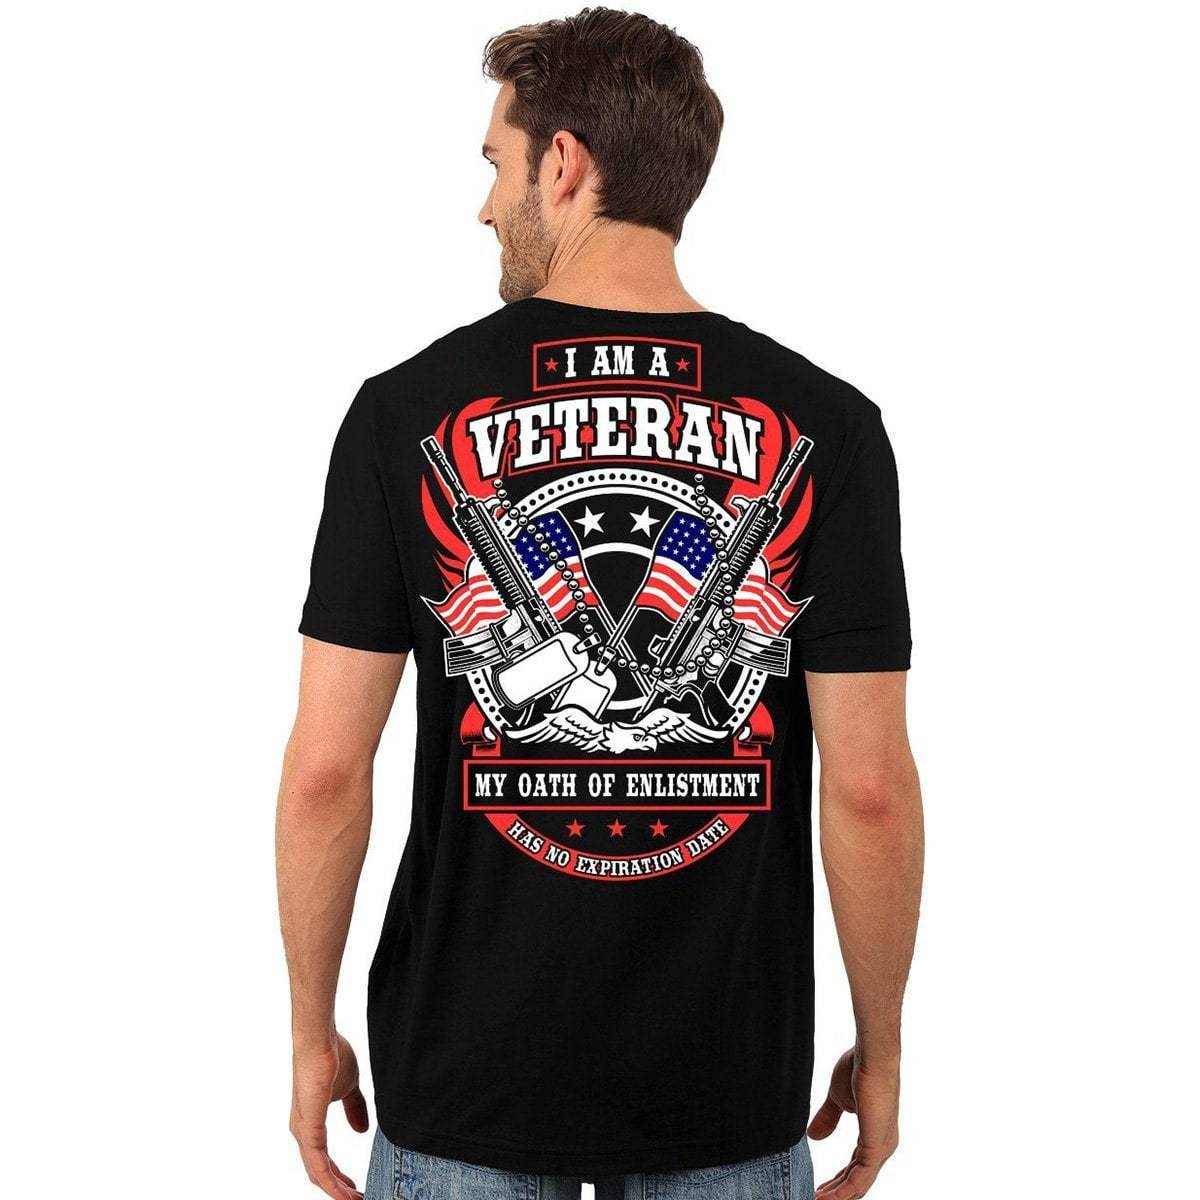 I Am A Veteran T-Shirt, Cotton, Black